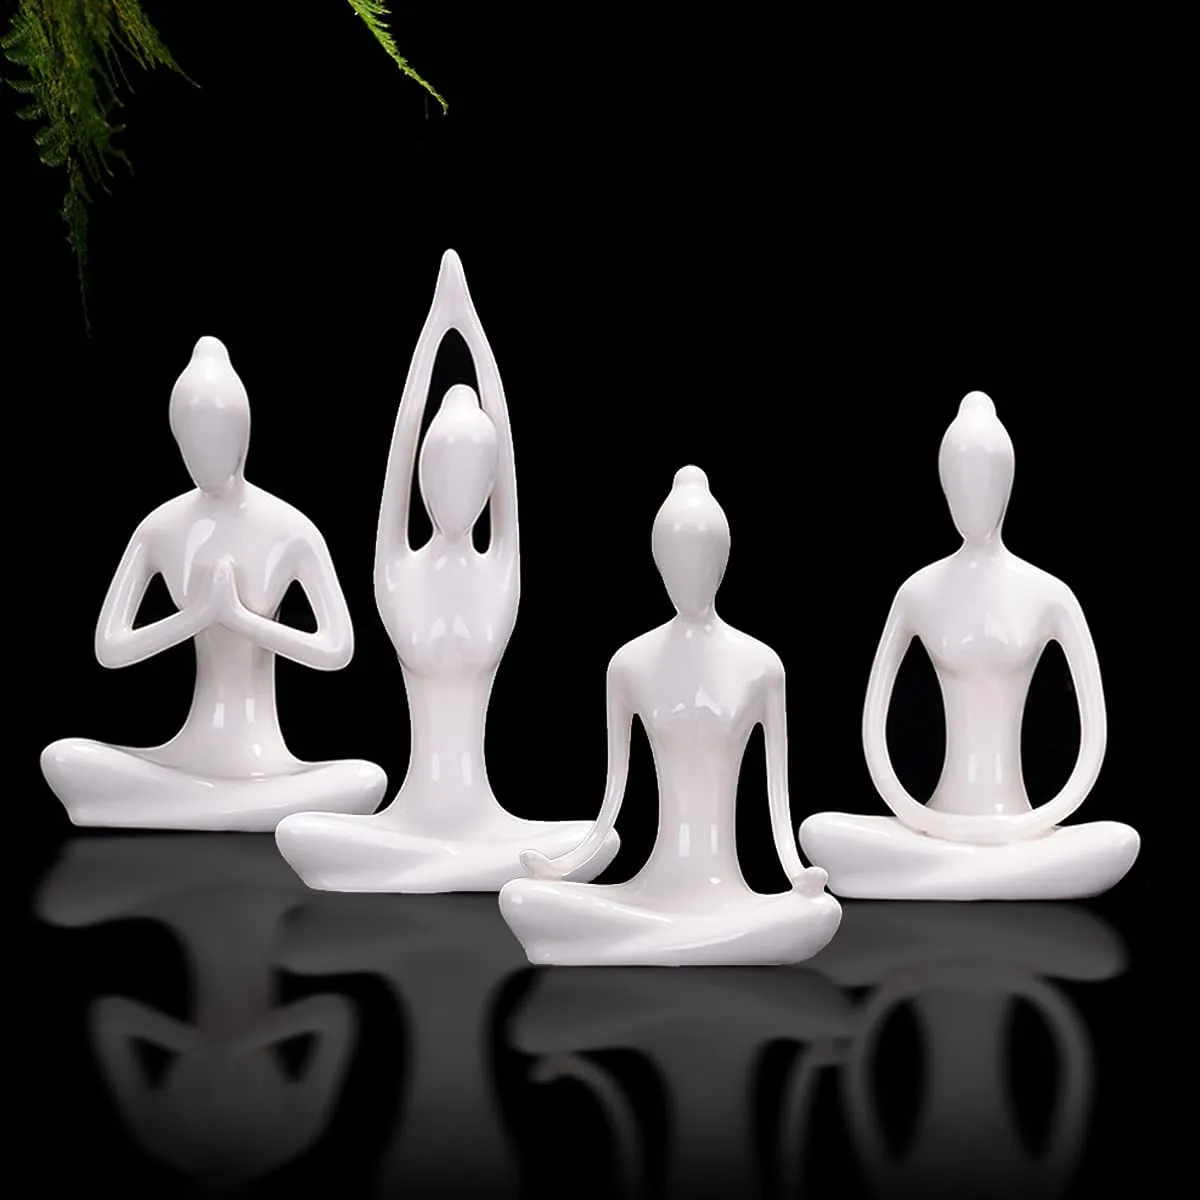 Meditation Yoga Pose Statue Figurine Ceramic Yoga Figure Decor Ornament